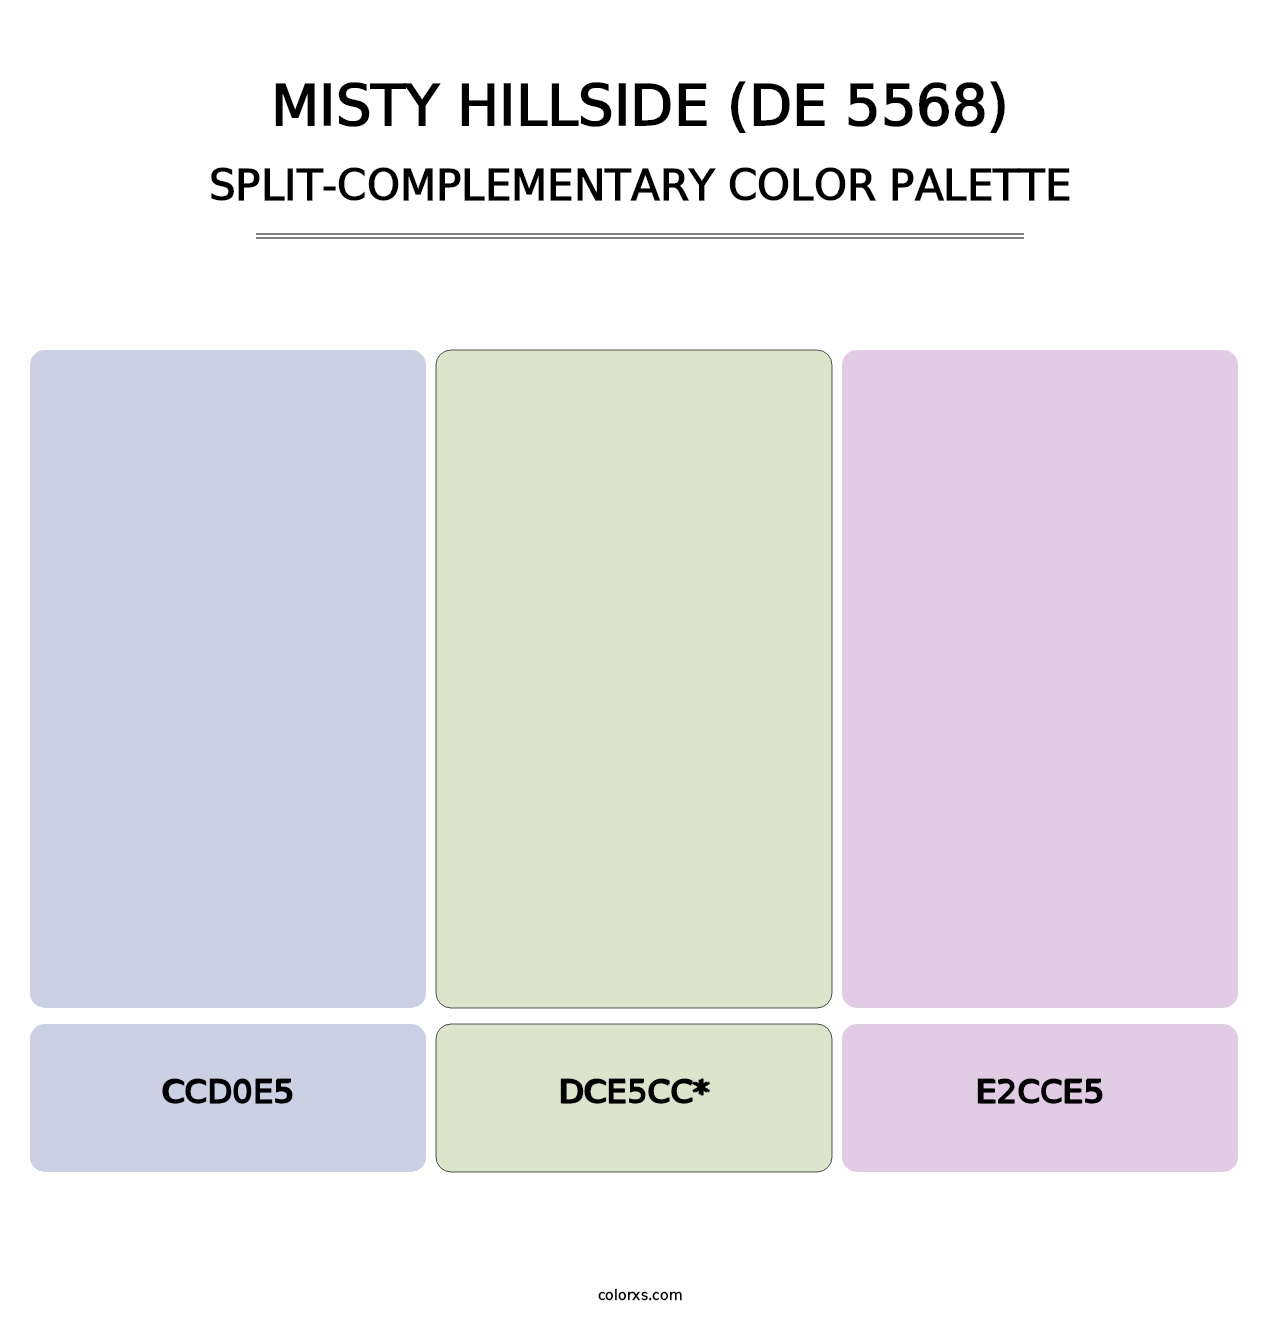 Misty Hillside (DE 5568) - Split-Complementary Color Palette